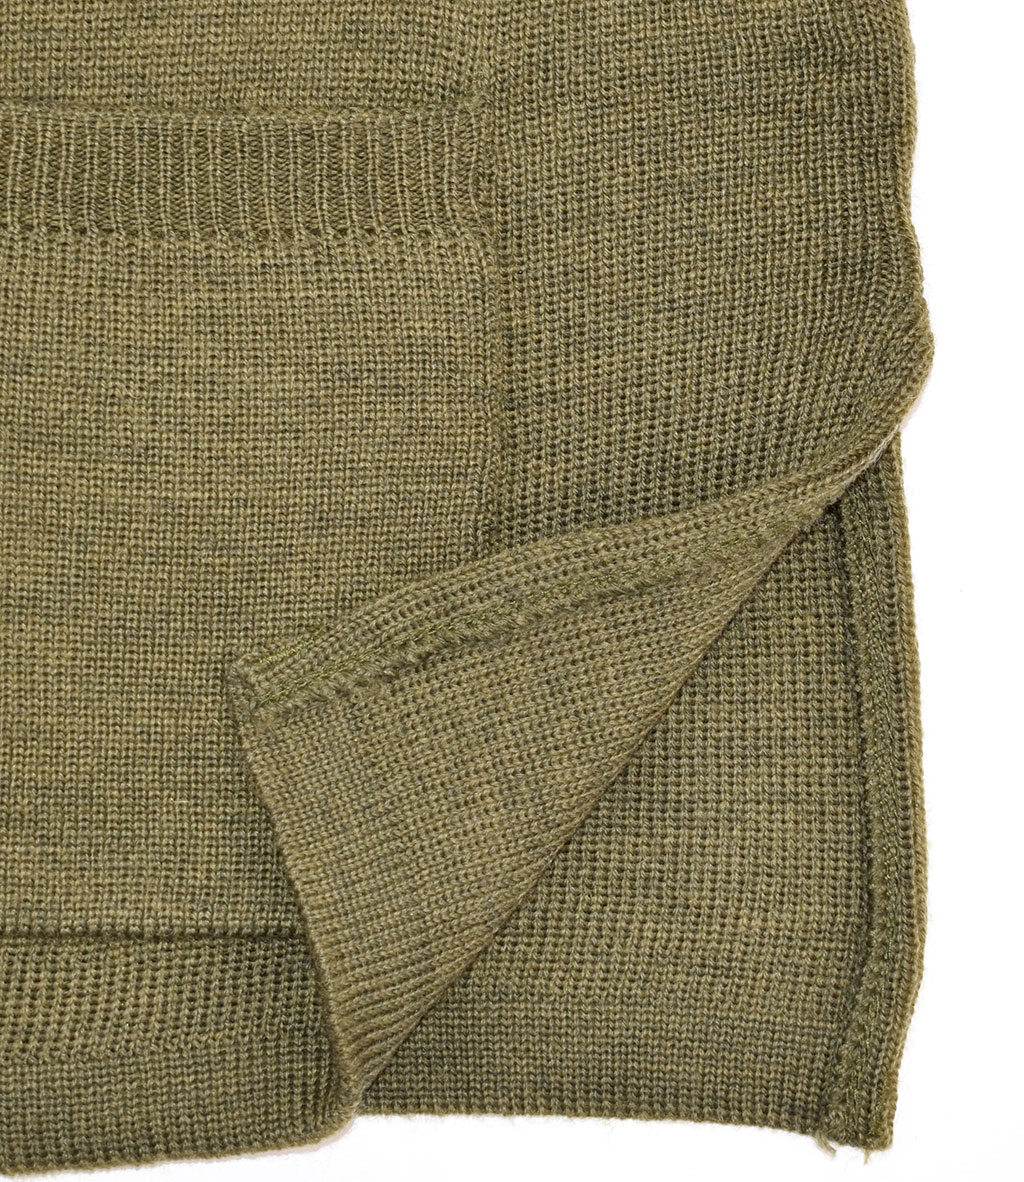 Женский свитер армейский шерсть80%/нейлон20% V-neck с пуговицами olive Англия